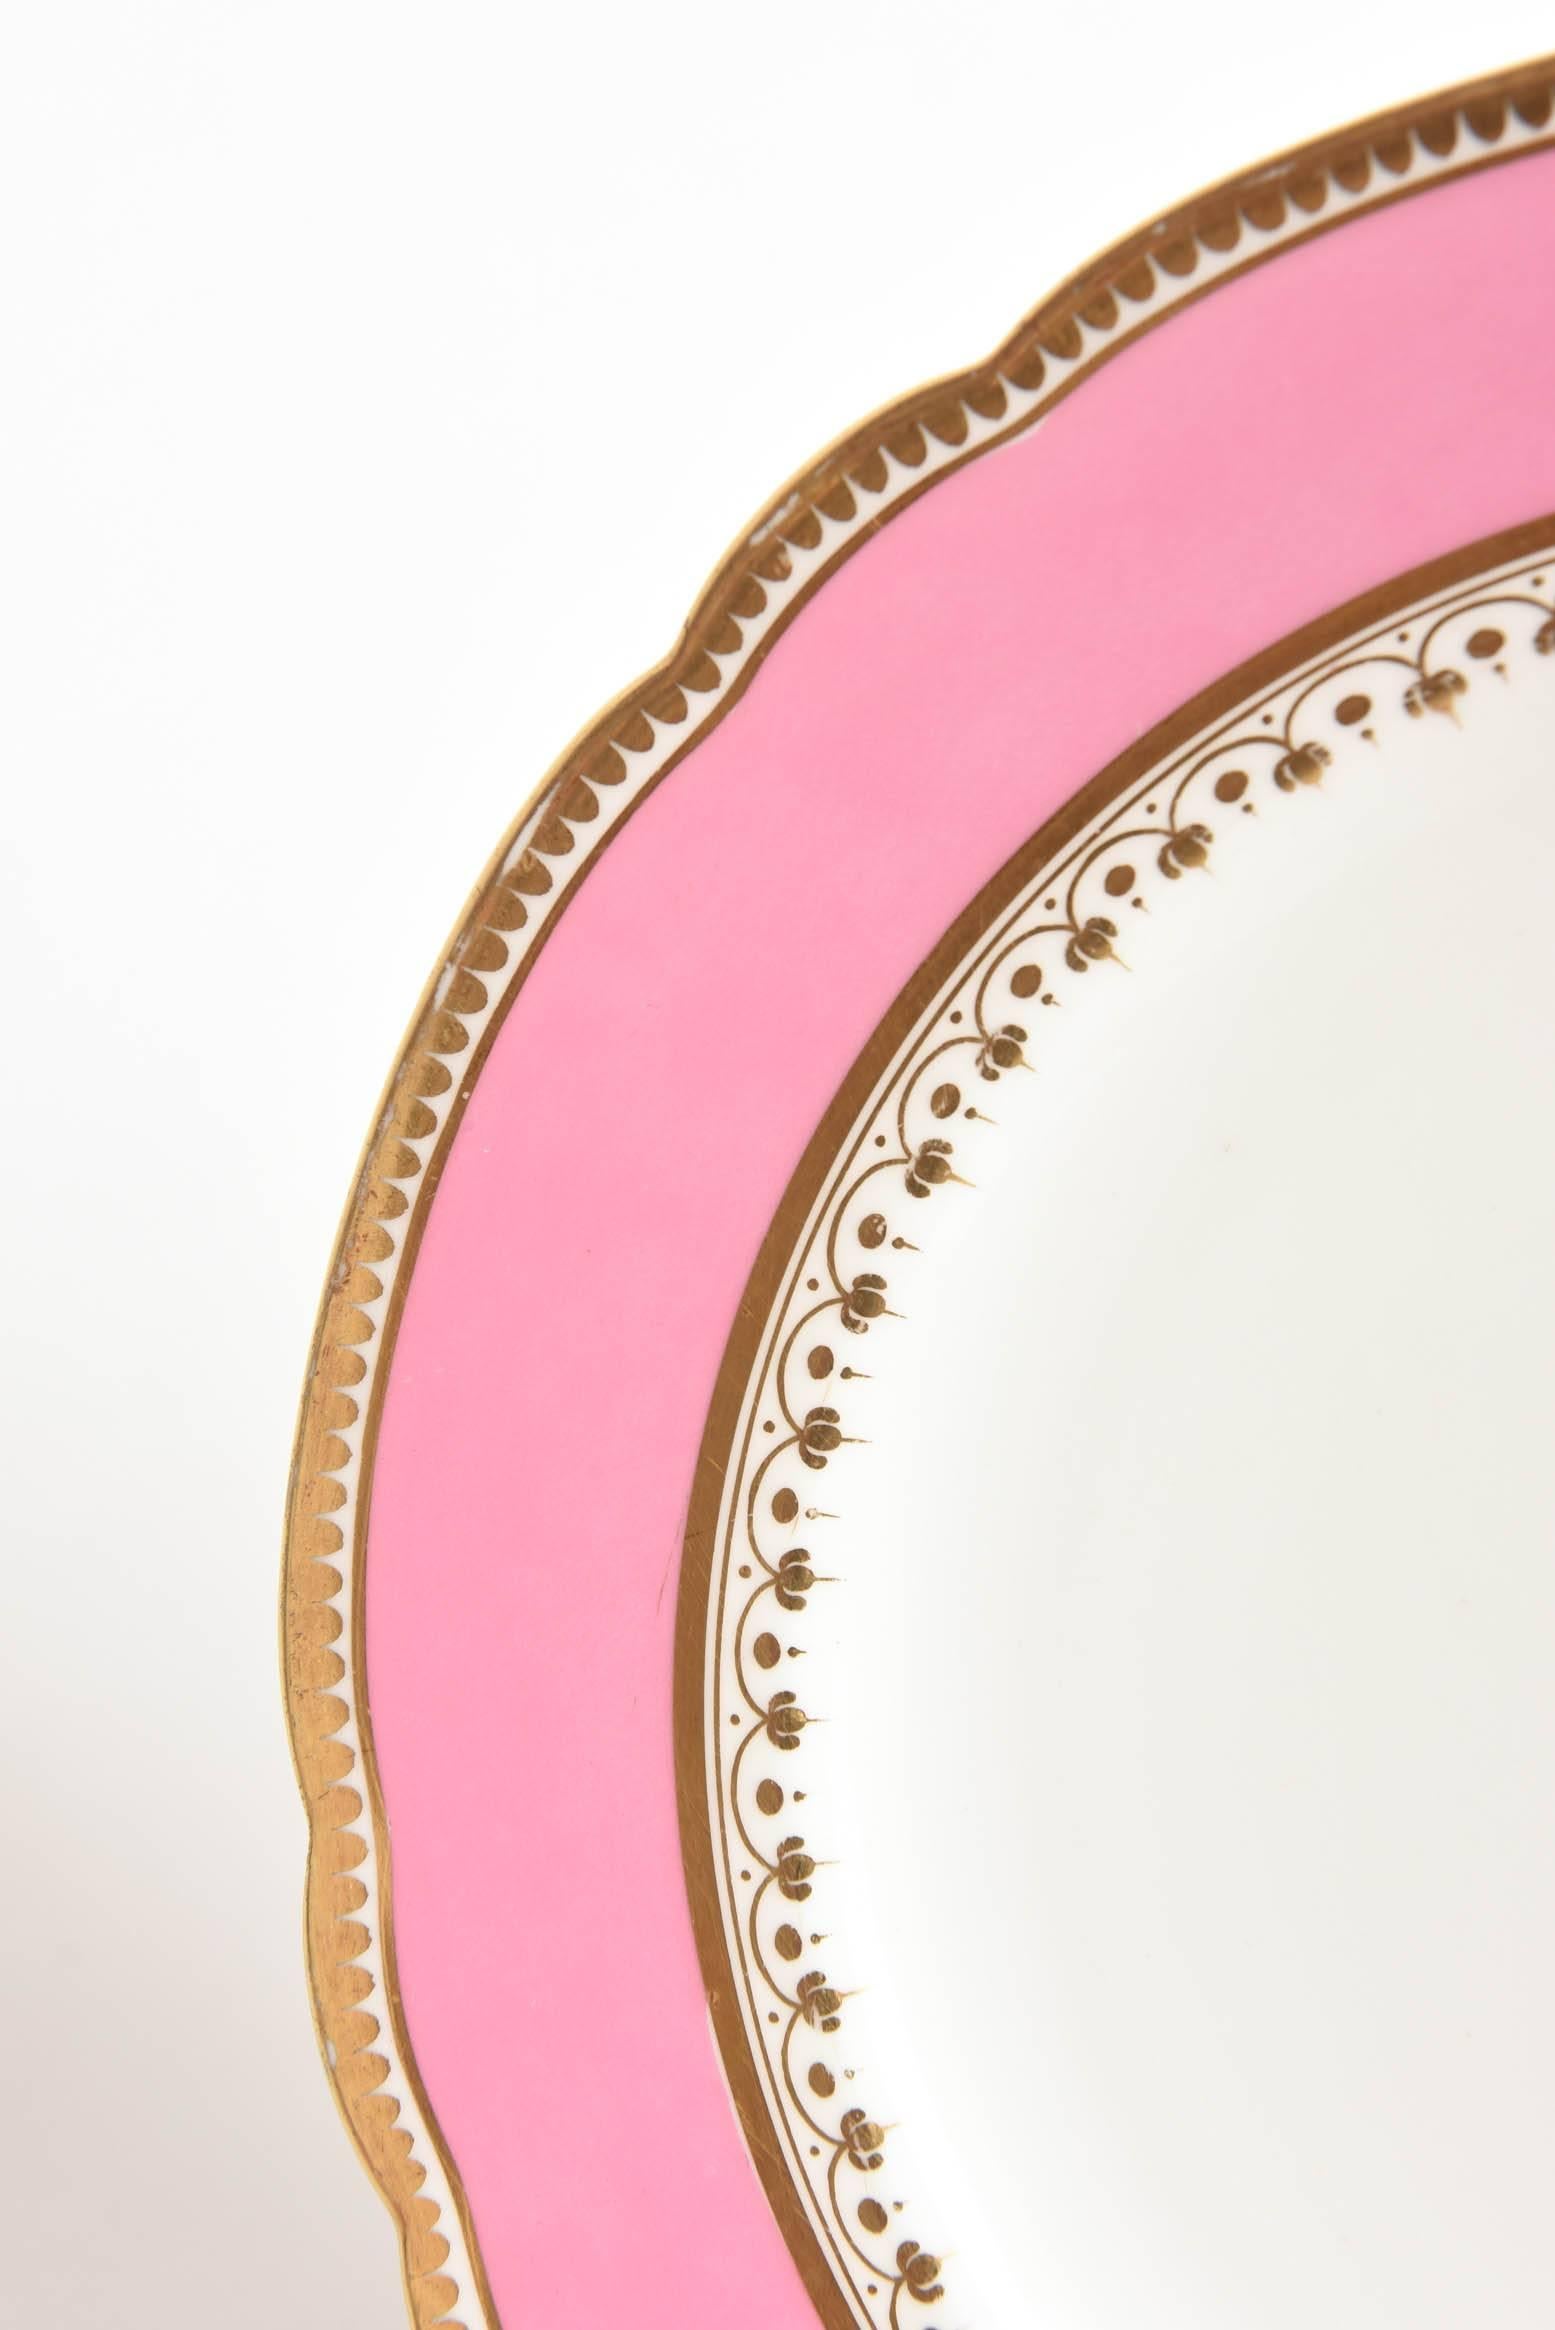 pink dessert plates